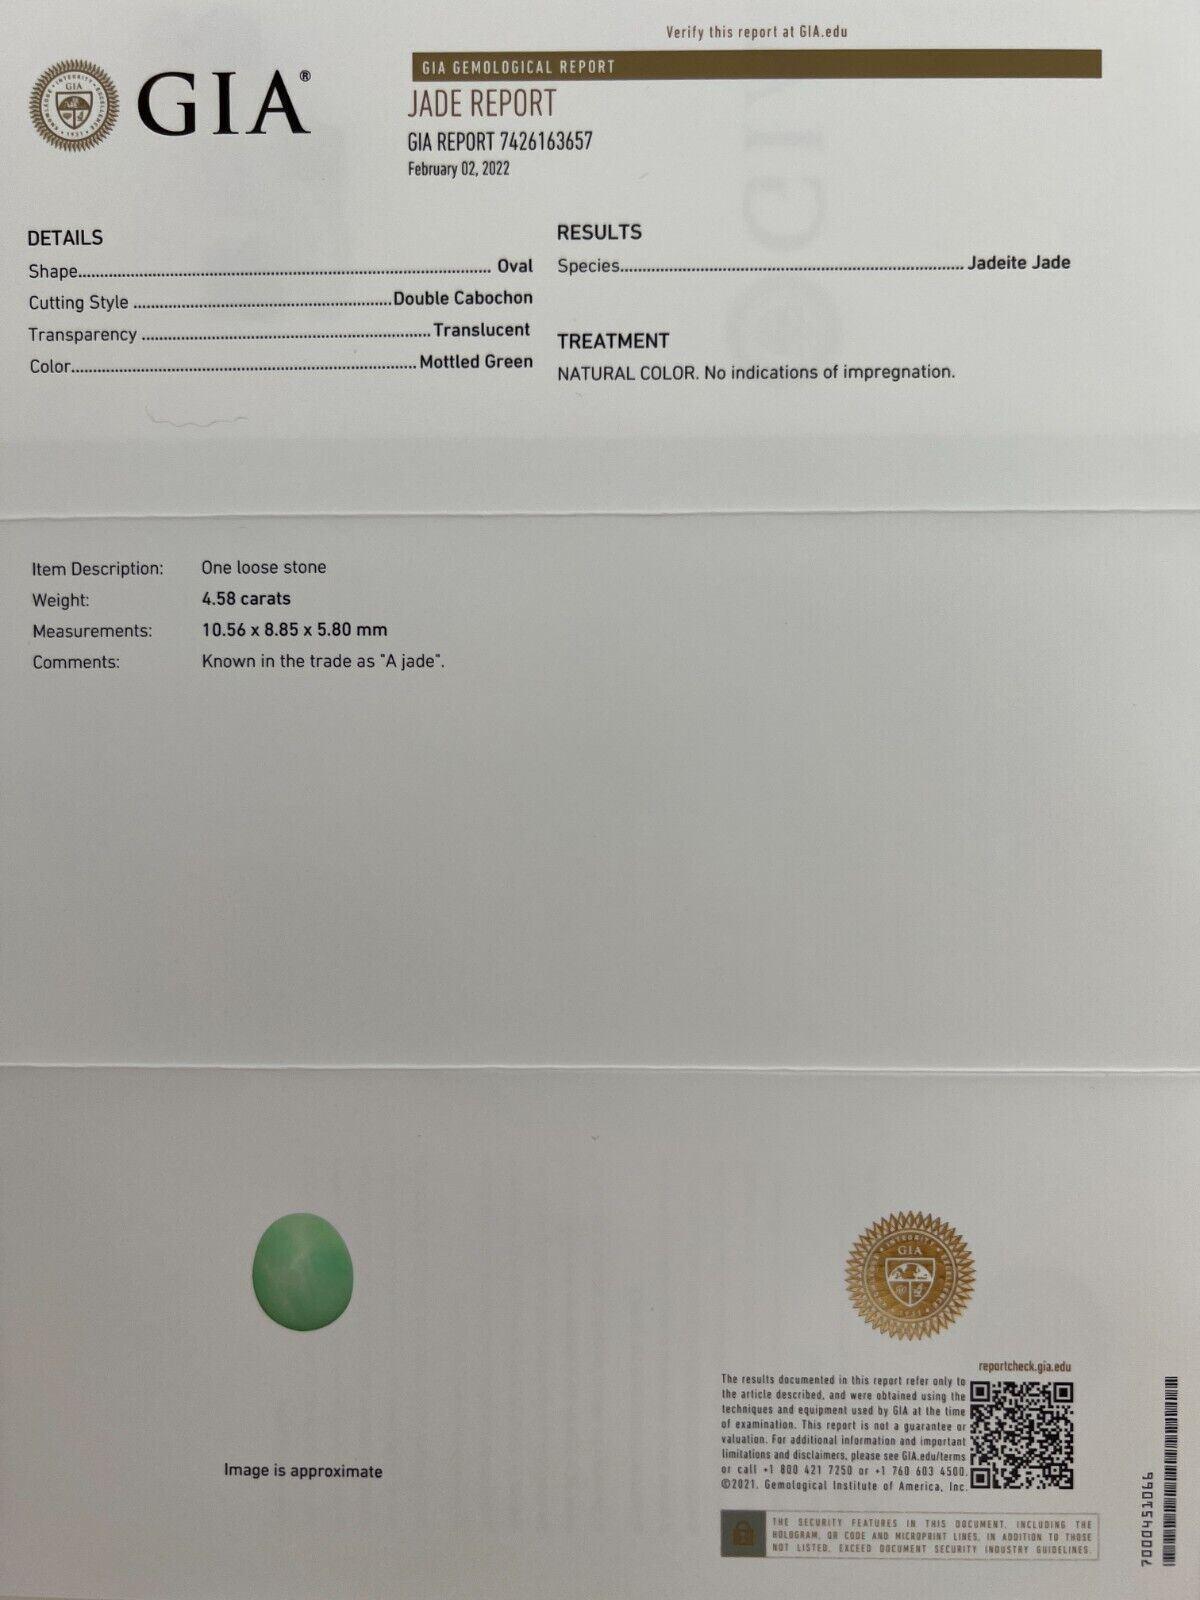 4.58 Carat GIA Certified Green Jadeite Jade ‘A’ Grade Oval Cabochon Untreated

GIA Certified Untreated Green Jadeite Gemstone.
4.58 Carat with an excellent oval cabochon cut. Fully certified by GIA. Totally untreated jadeite jade, referred to as ‘A’